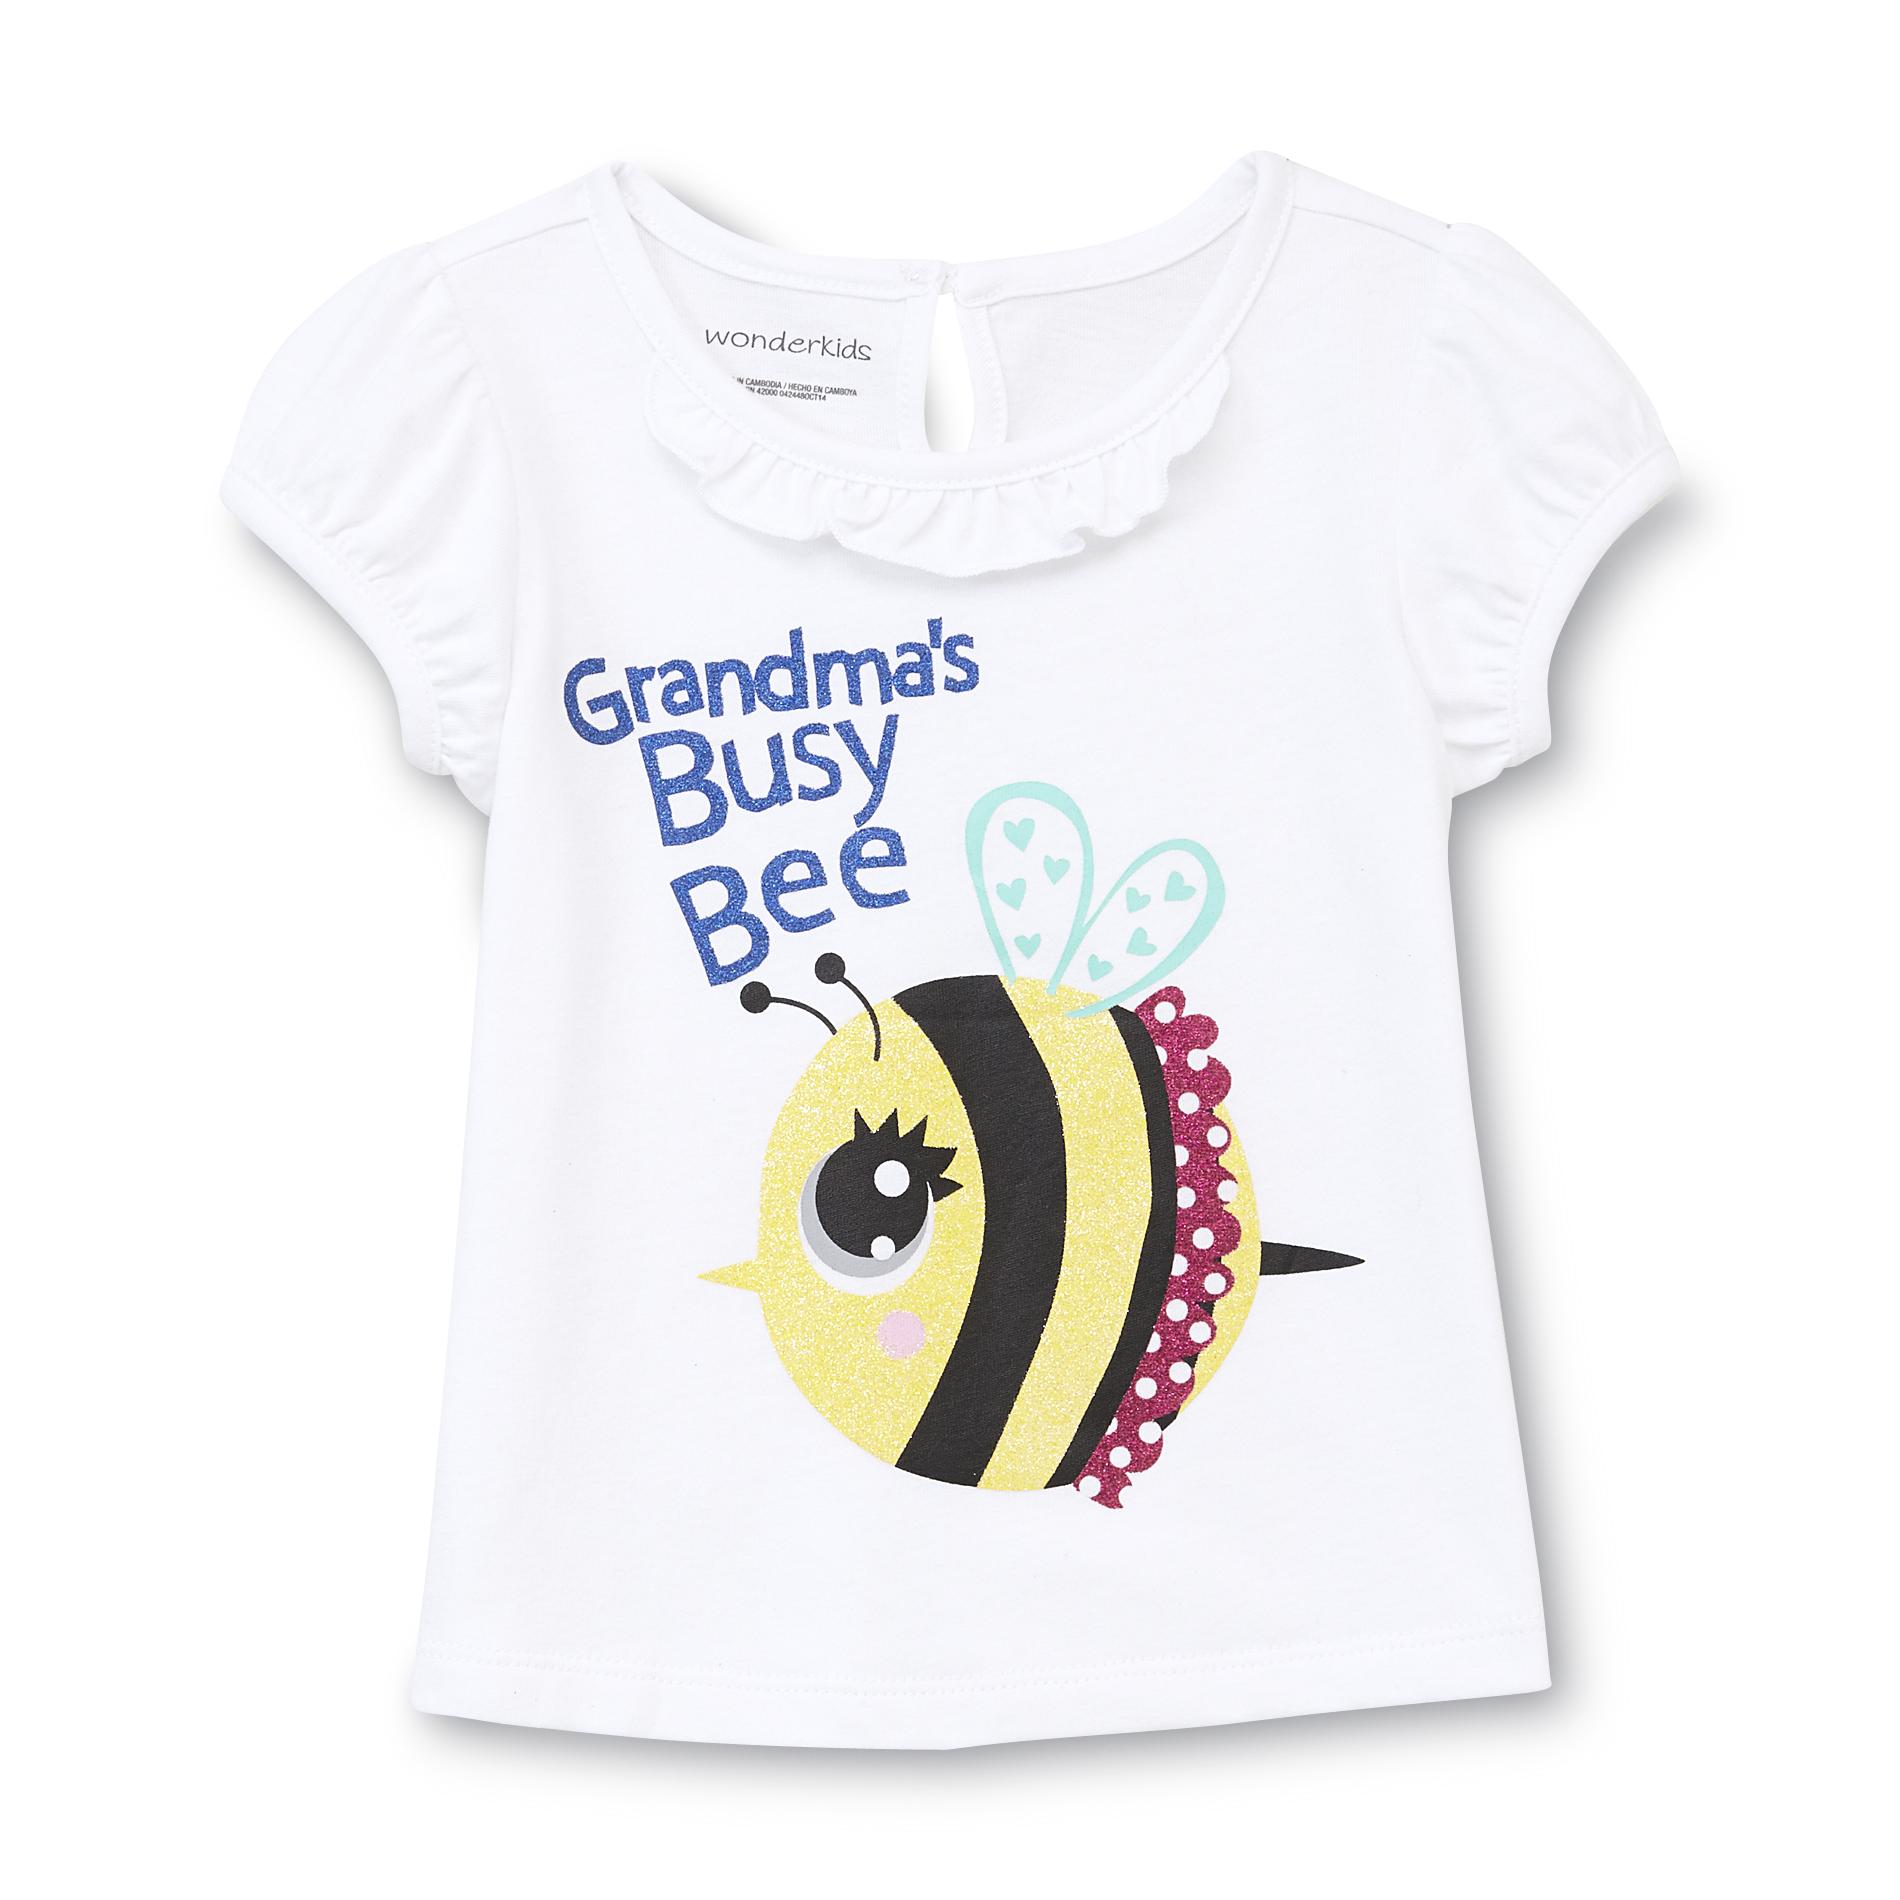 WonderKids Infant & Toddler Girl's Embellished Top - Grandma's Busy Bee